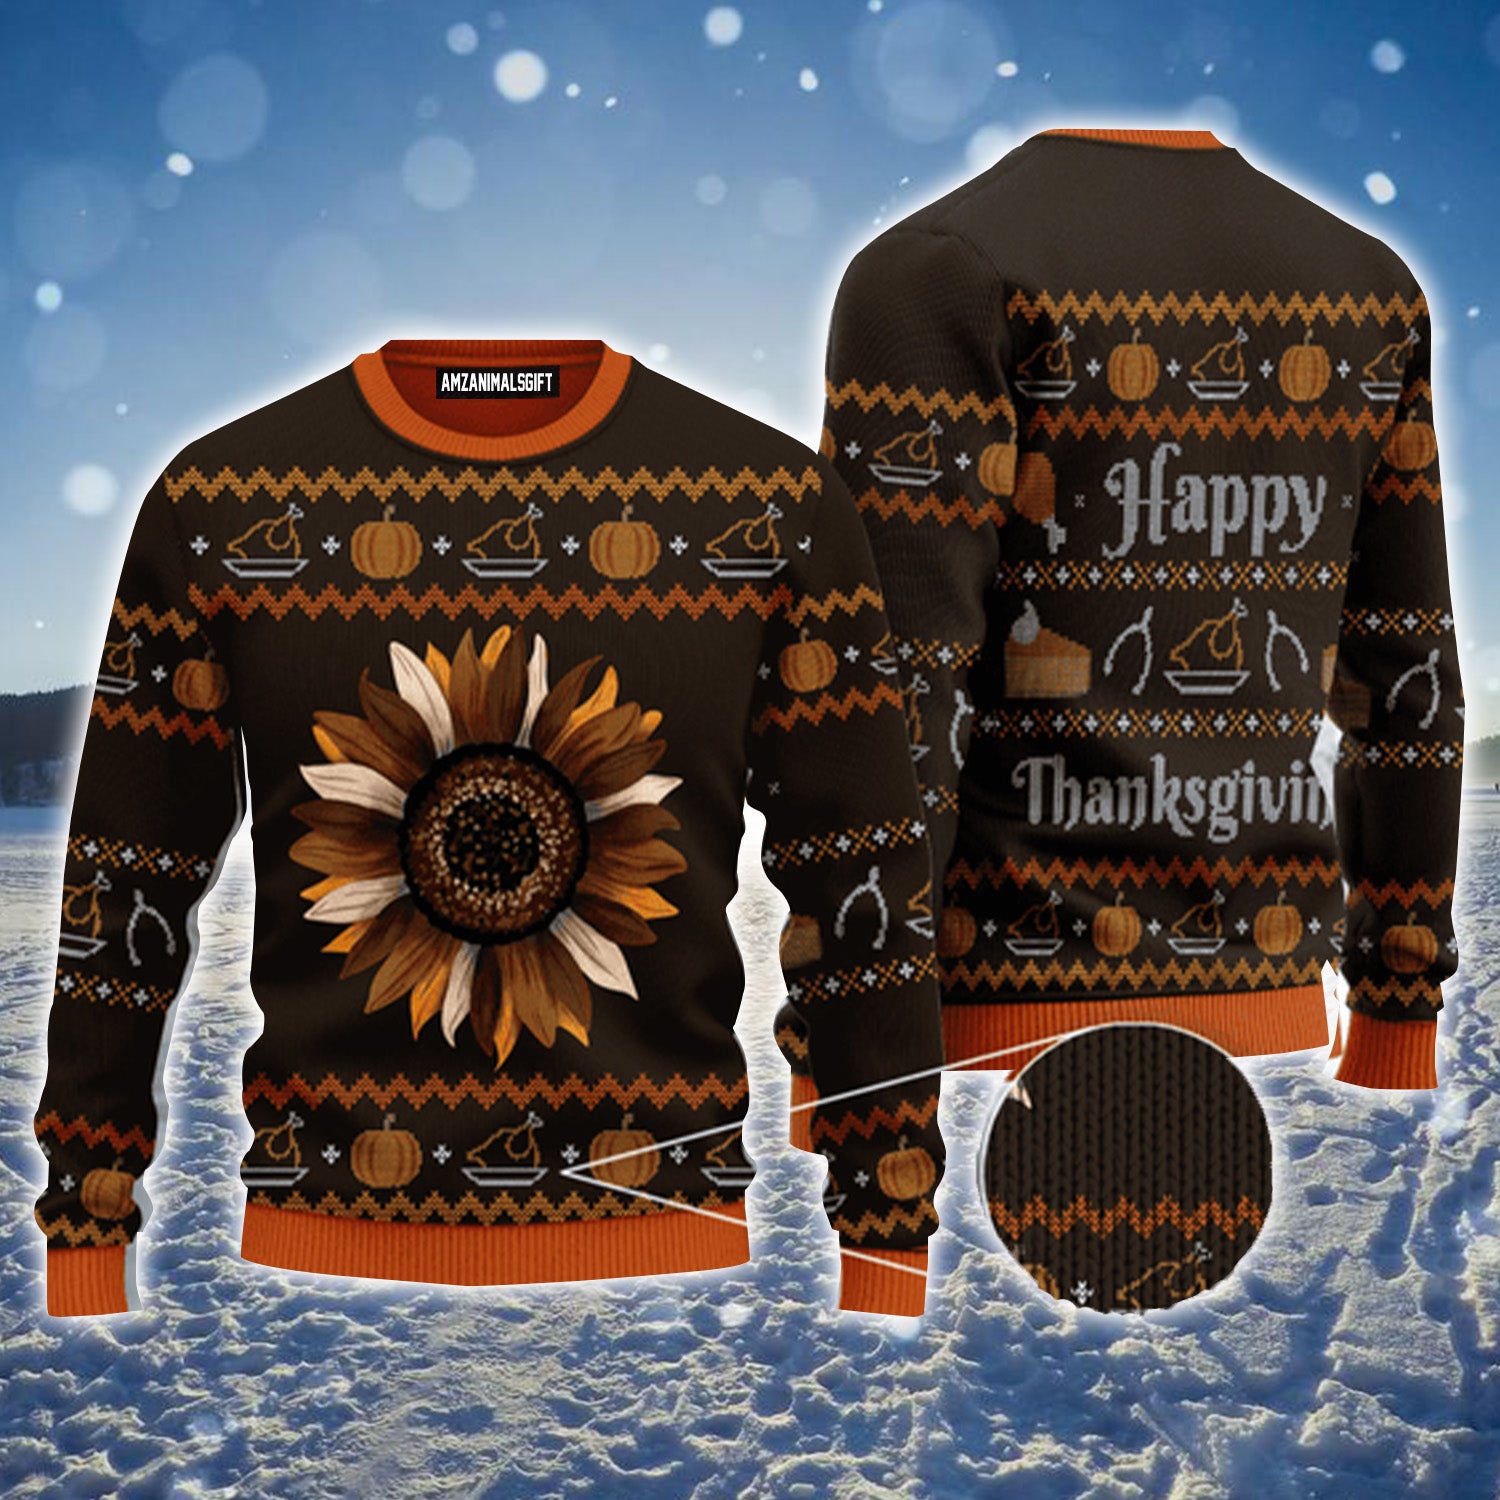 Happy Thanksgiving Sunflower Pumpkin Urly Sweater, Christmas Sweater For Men & Women - Perfect Gift For New Year, Winter, Christmas, Thanksgiving